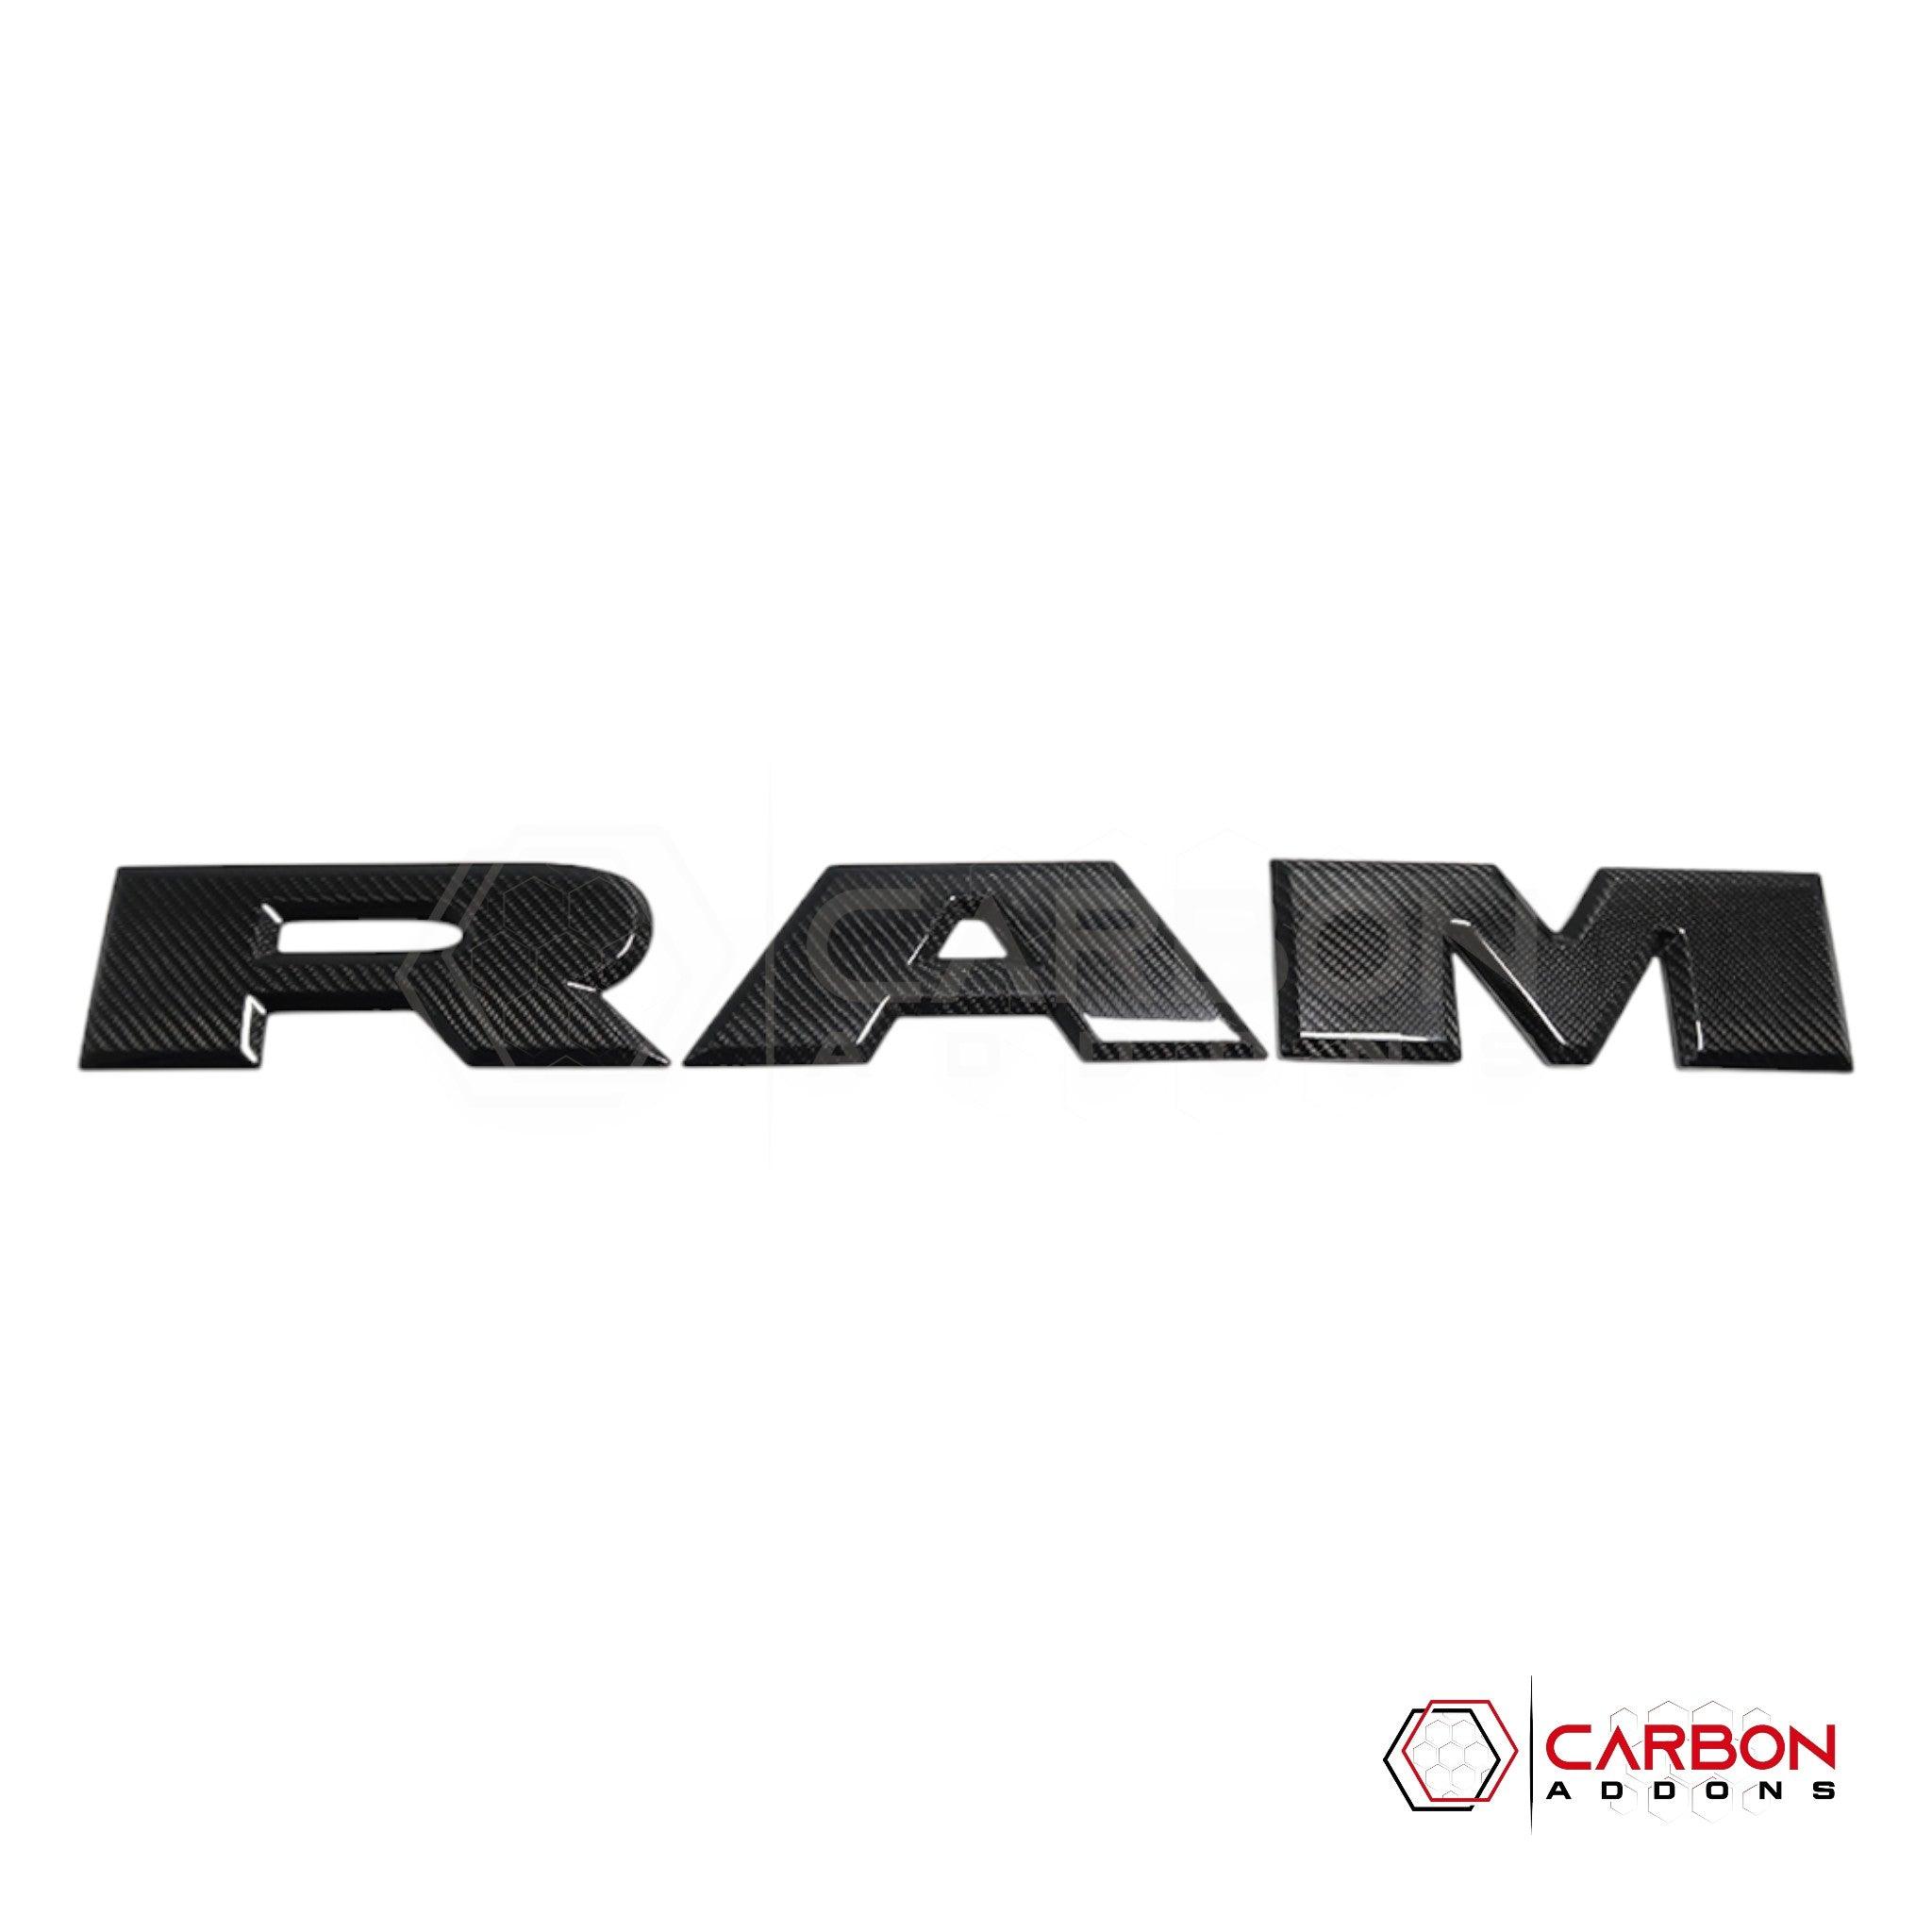 [Coming Soon] RAM TRX 2021-2024 Tailgate RAM Emblem Lettering Hard Carbon Fiber Covers - carbonaddons Carbon Fiber Parts, Accessories, Upgrades, Mods